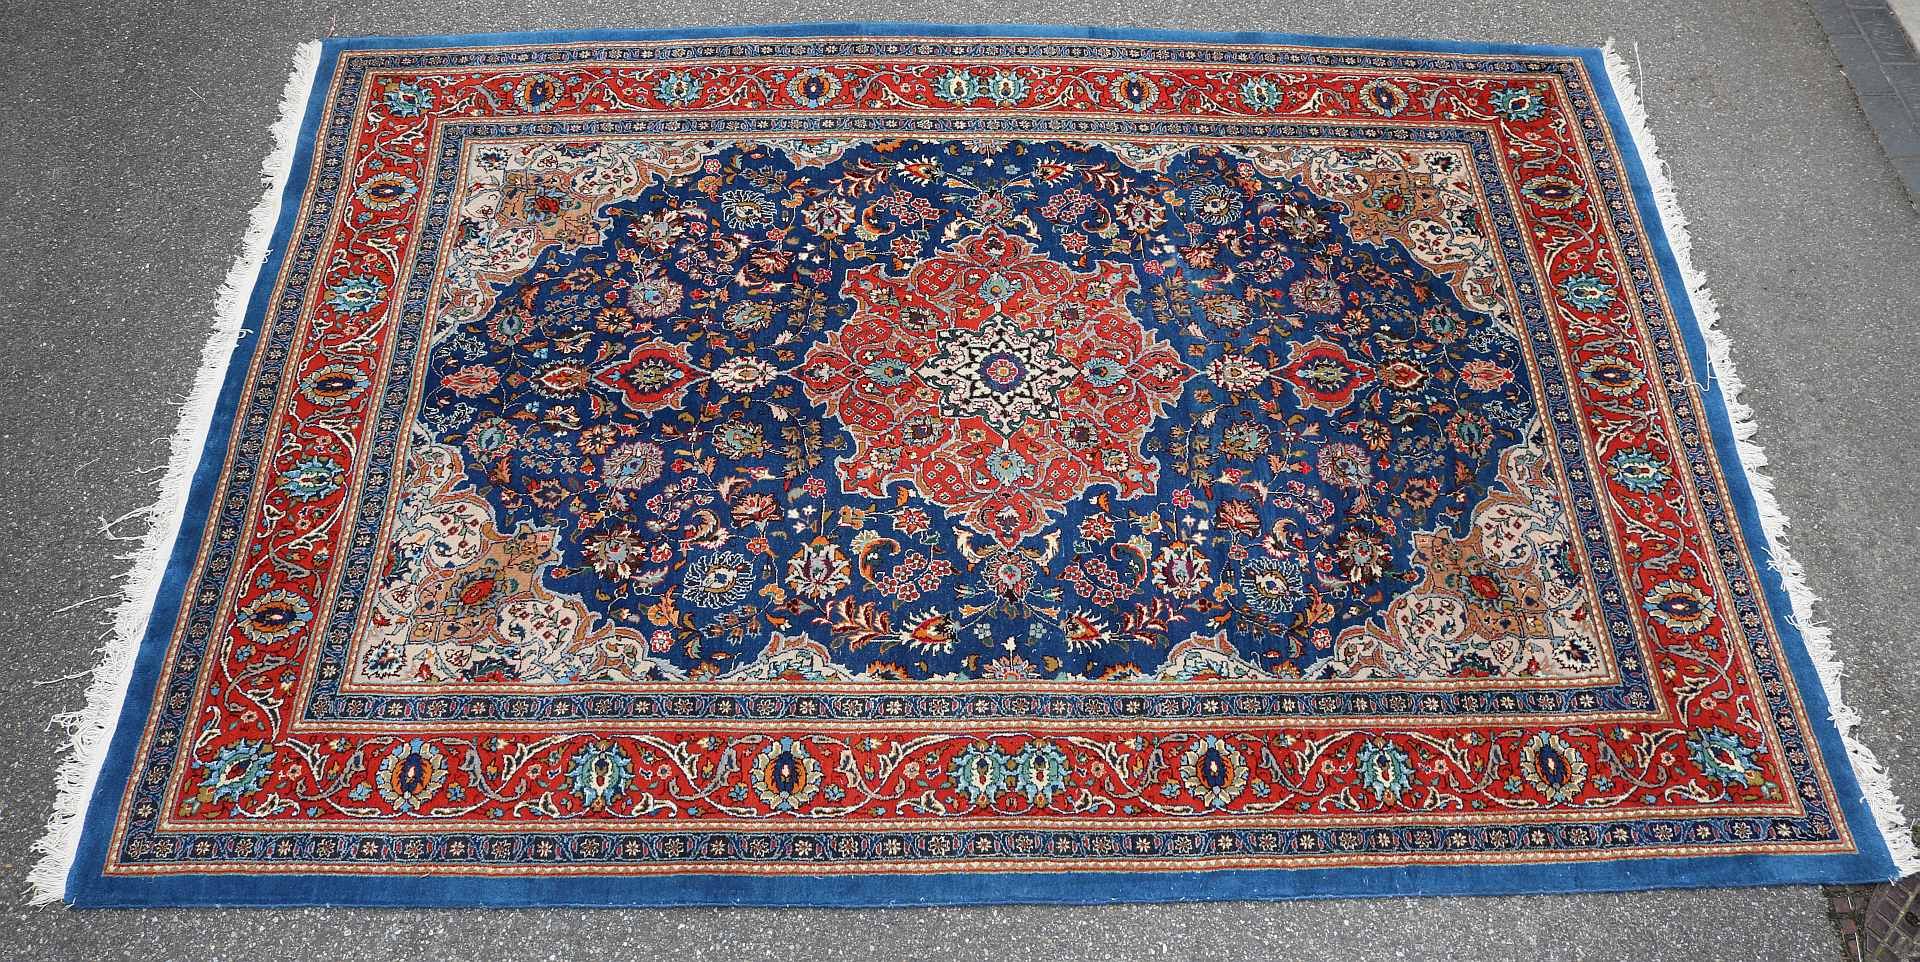 Large Persian rug, 300 x 200 cm.